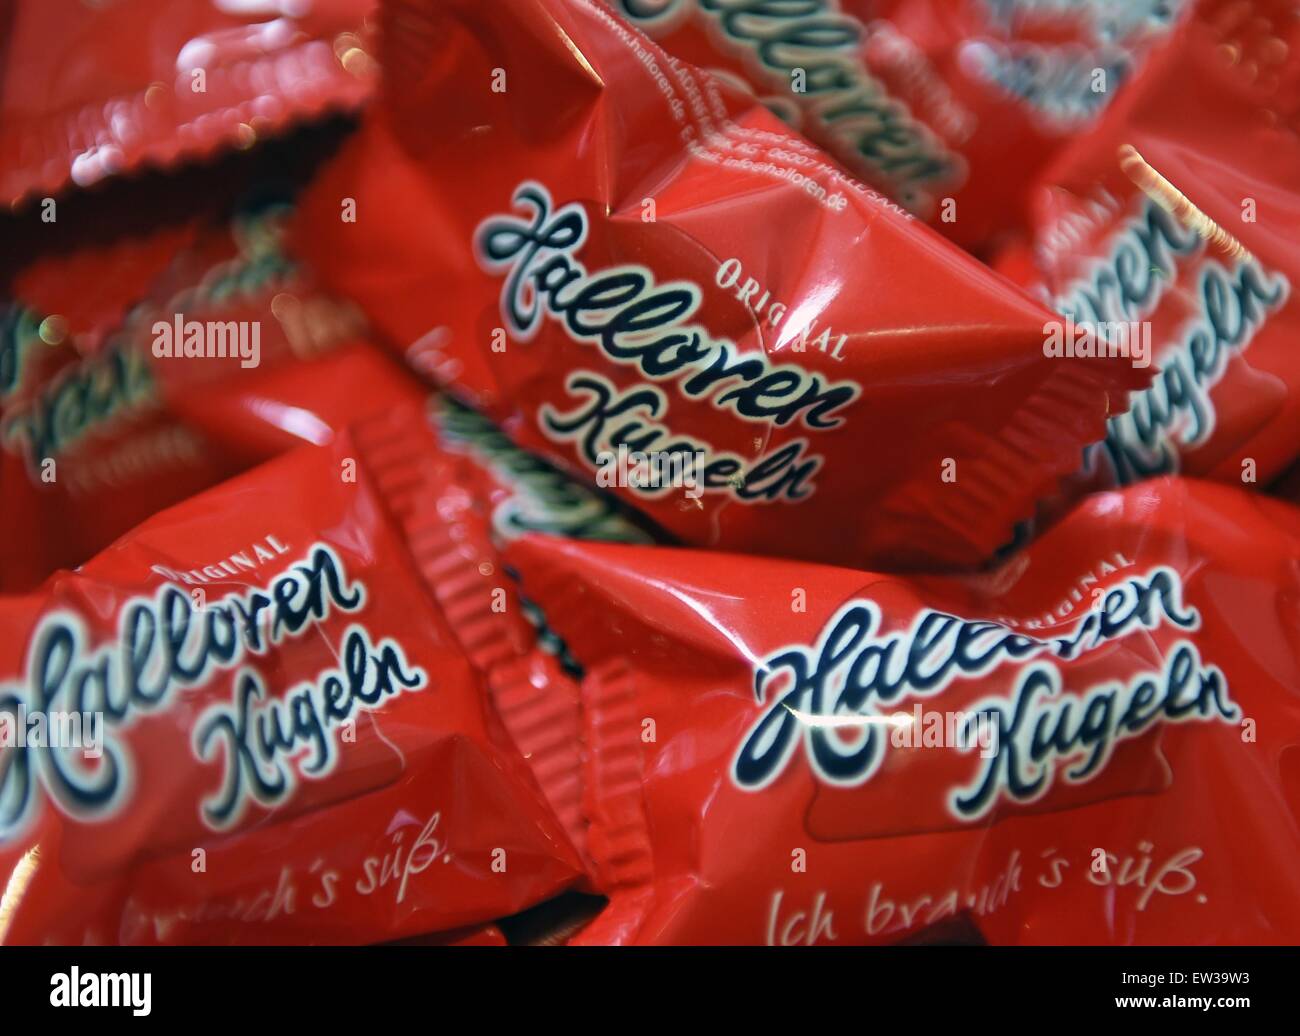 'Halloren Kugeln' candies lie on a table at the Halloren Schokoladenfabrik AG shareholders' meeting in Halle/Saale, Germany, 17 June 2015. With 200,000 euros, Halloren yielded 90 percent less in 2014 than in 2013. Photo: HENDRIK SCHMIDT/dpa Stock Photo